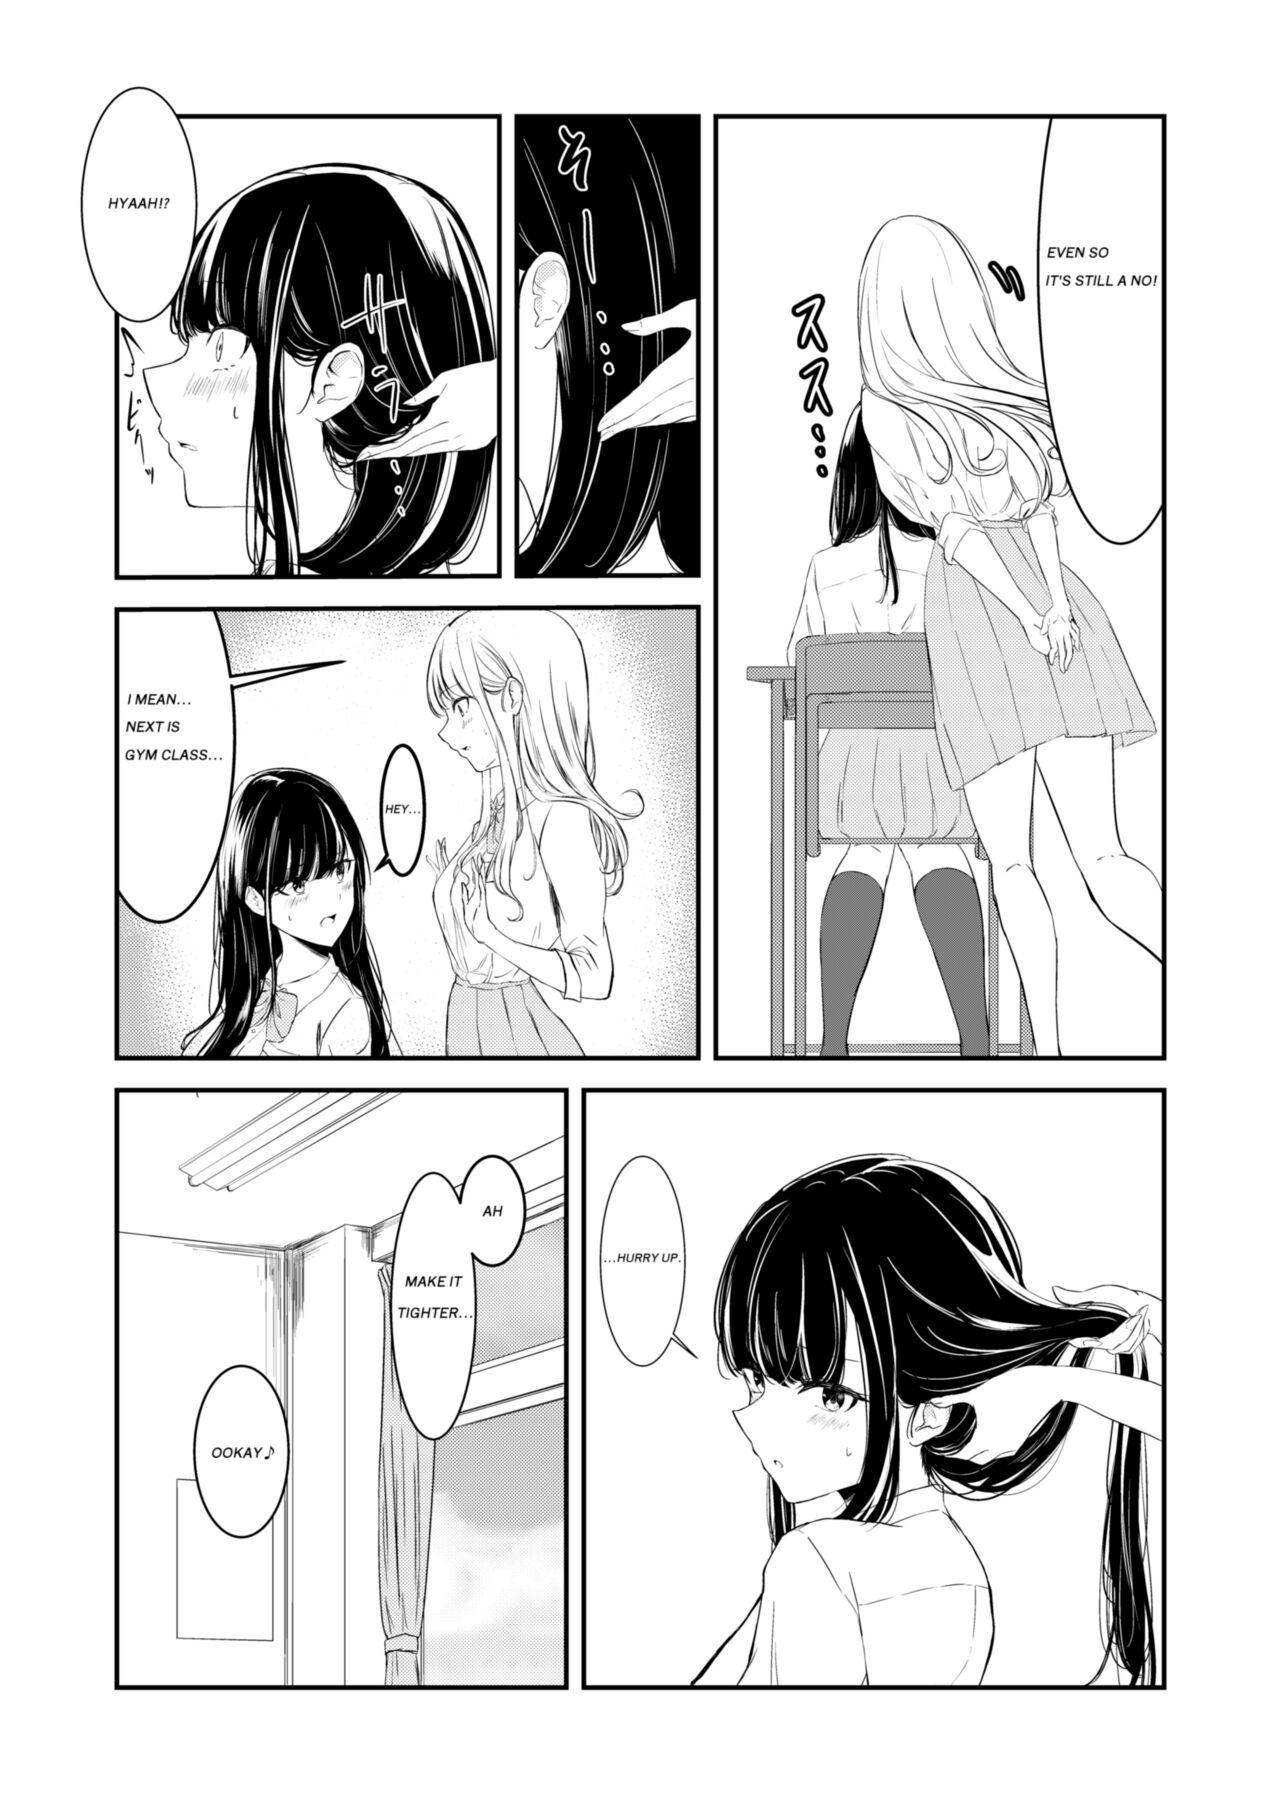 Yuri comic Part 1,2 and 3. 7